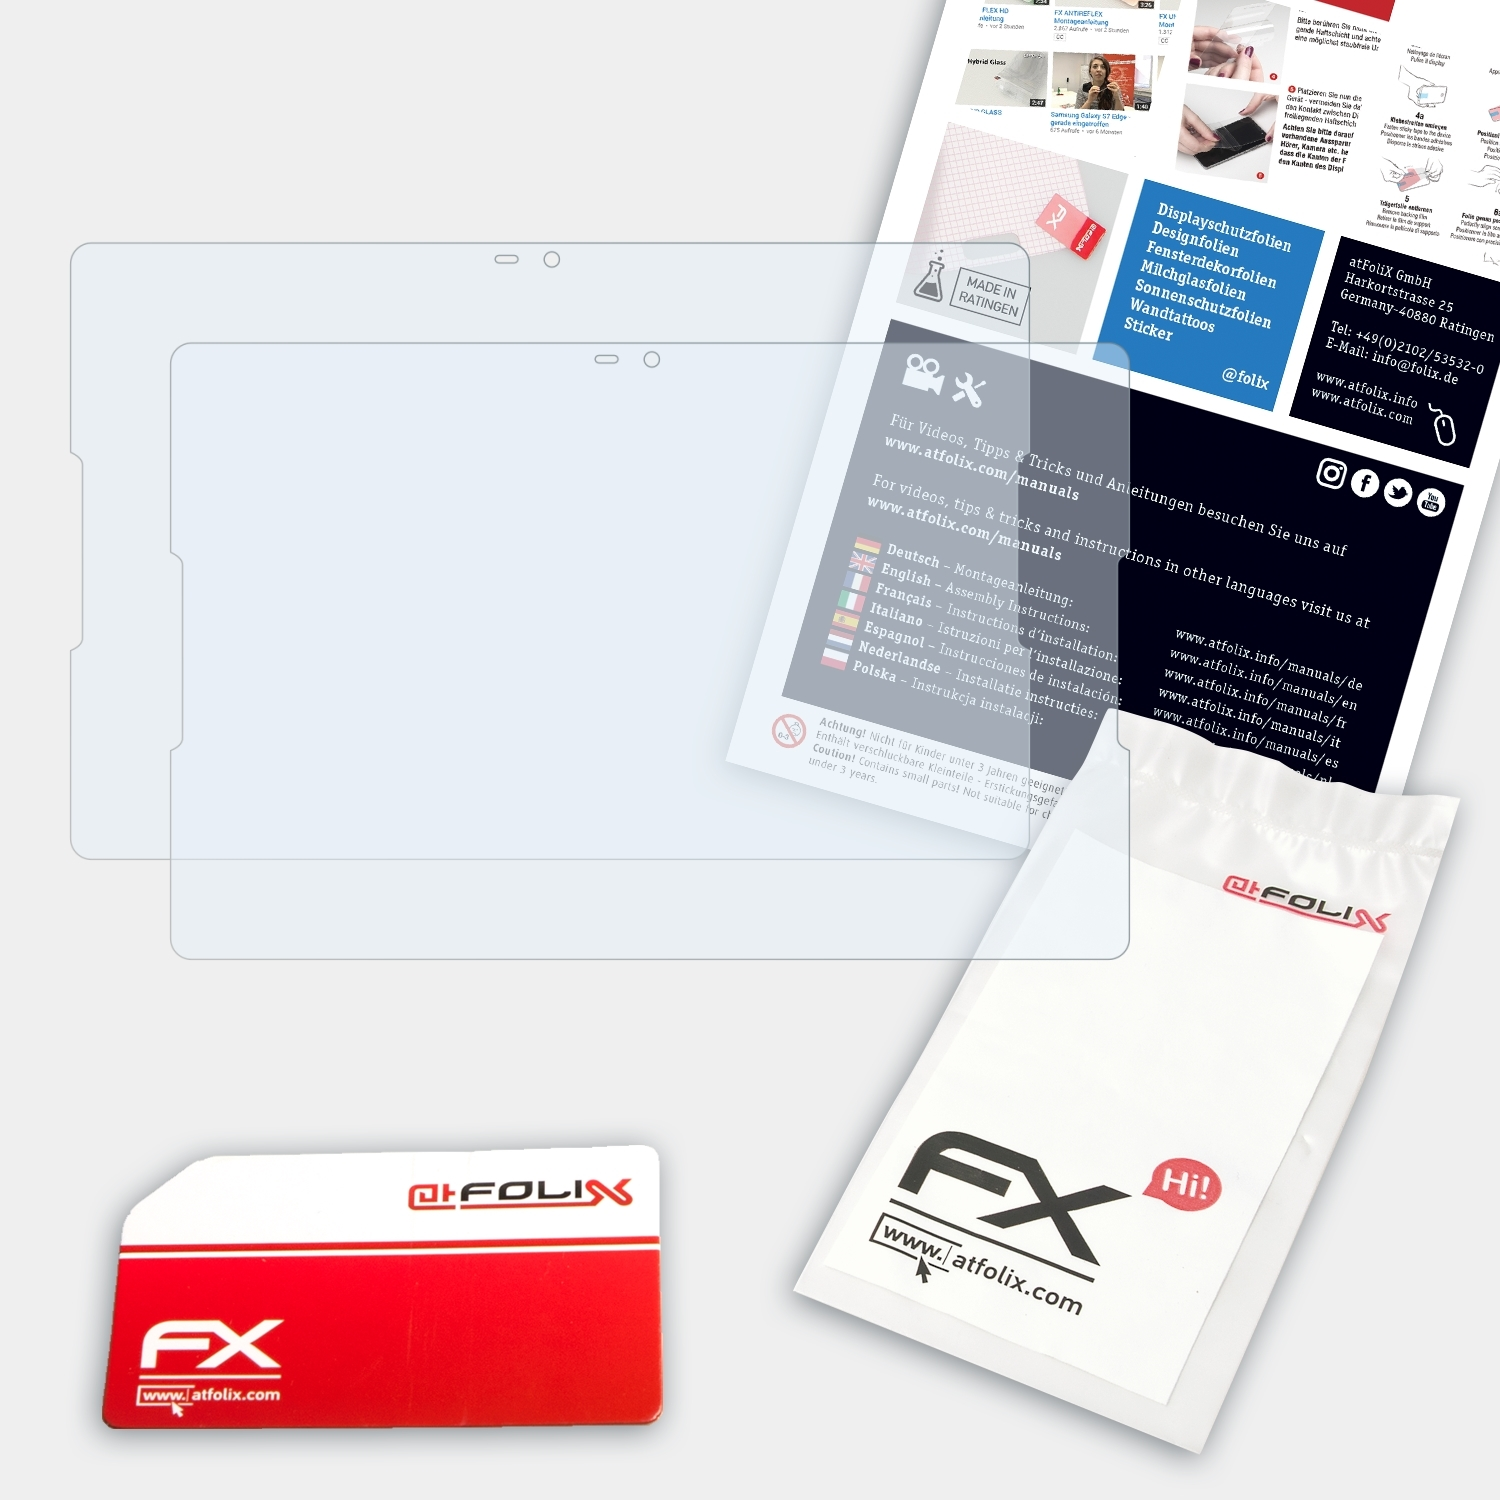 ATFOLIX 2x FX-Clear Displayschutz(für (B3-A32)) One 10 Acer Iconia